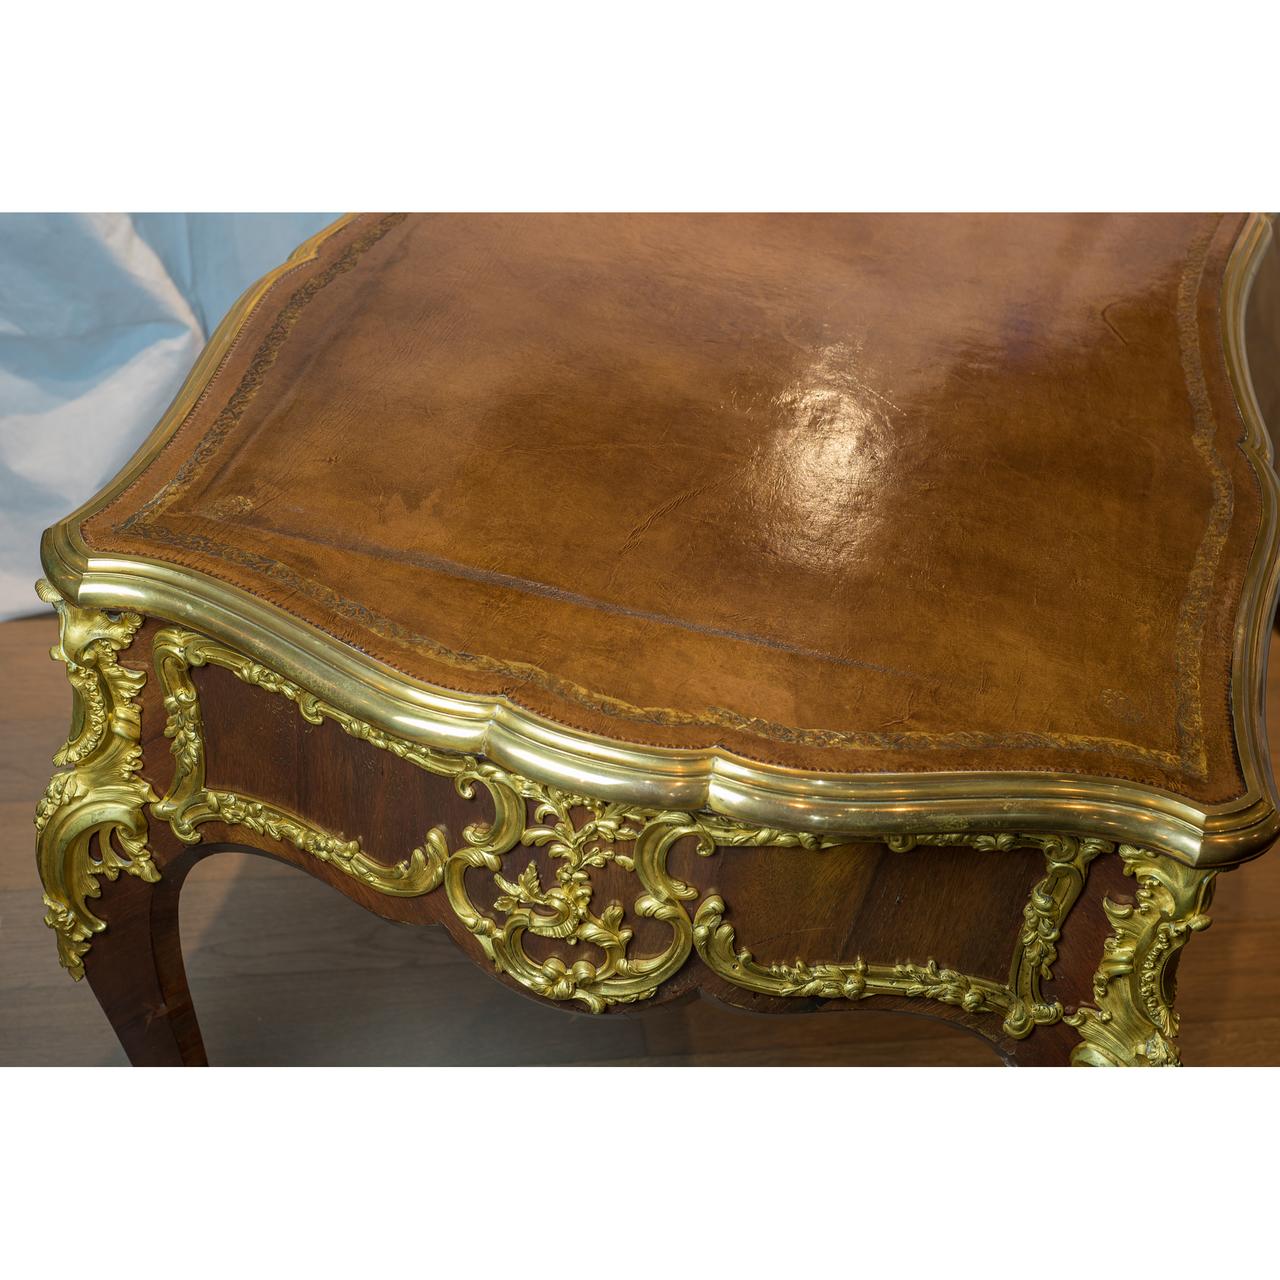 19th Century Louis XV Style Ormolu-Mounted Tulipwood and Kingwood Bureau Plat For Sale 2